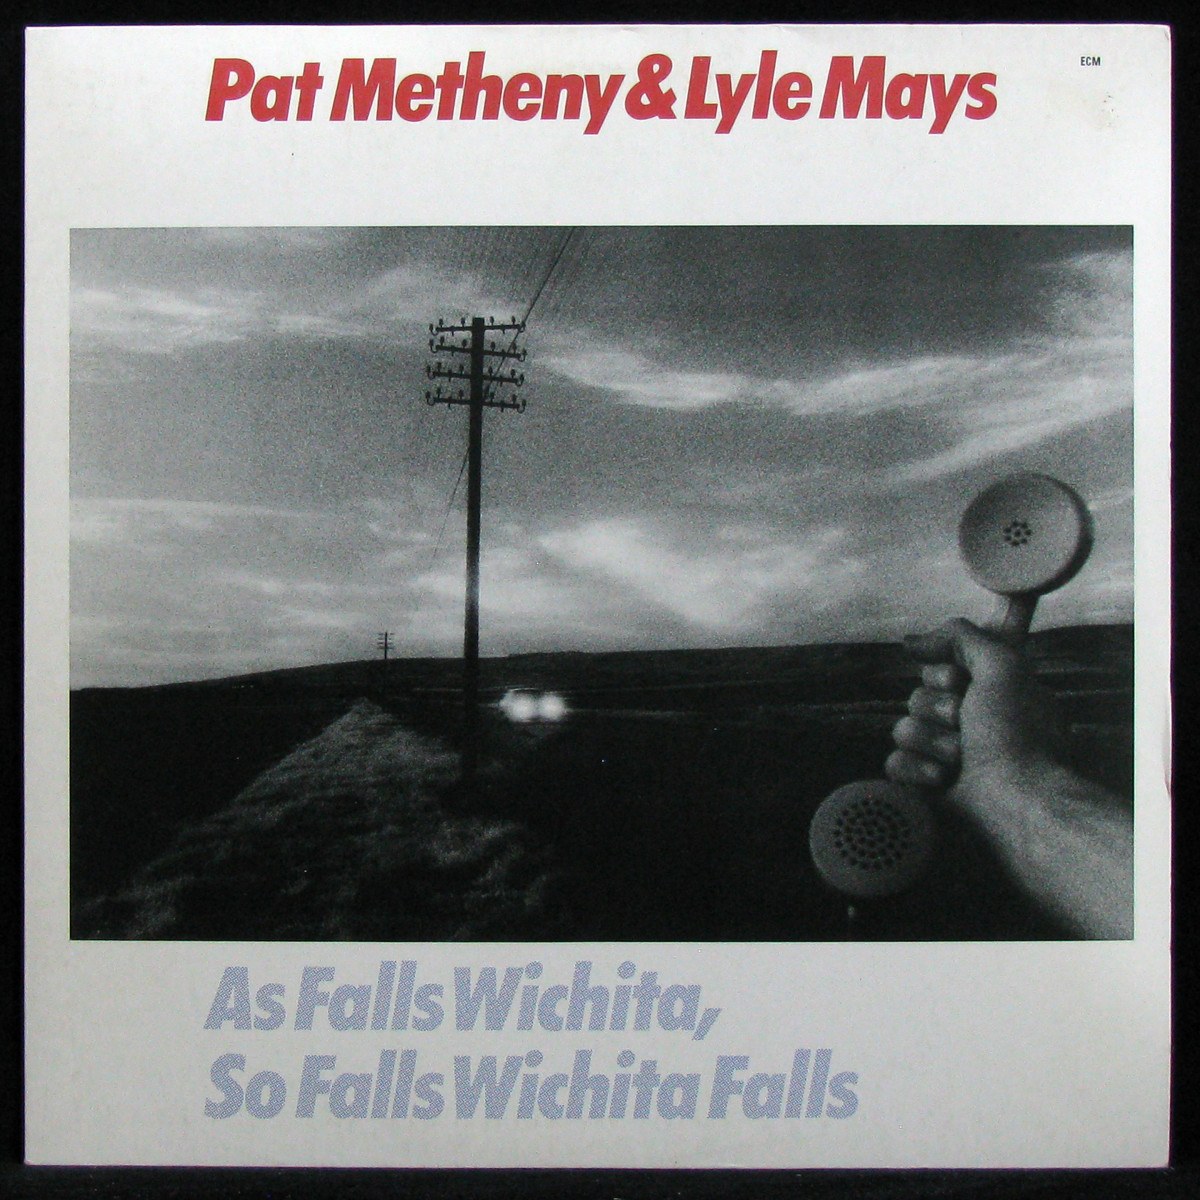 LP Pat Metheny / Lyle Mays — As Falls Wichita, So Falls Wichita Falls фото